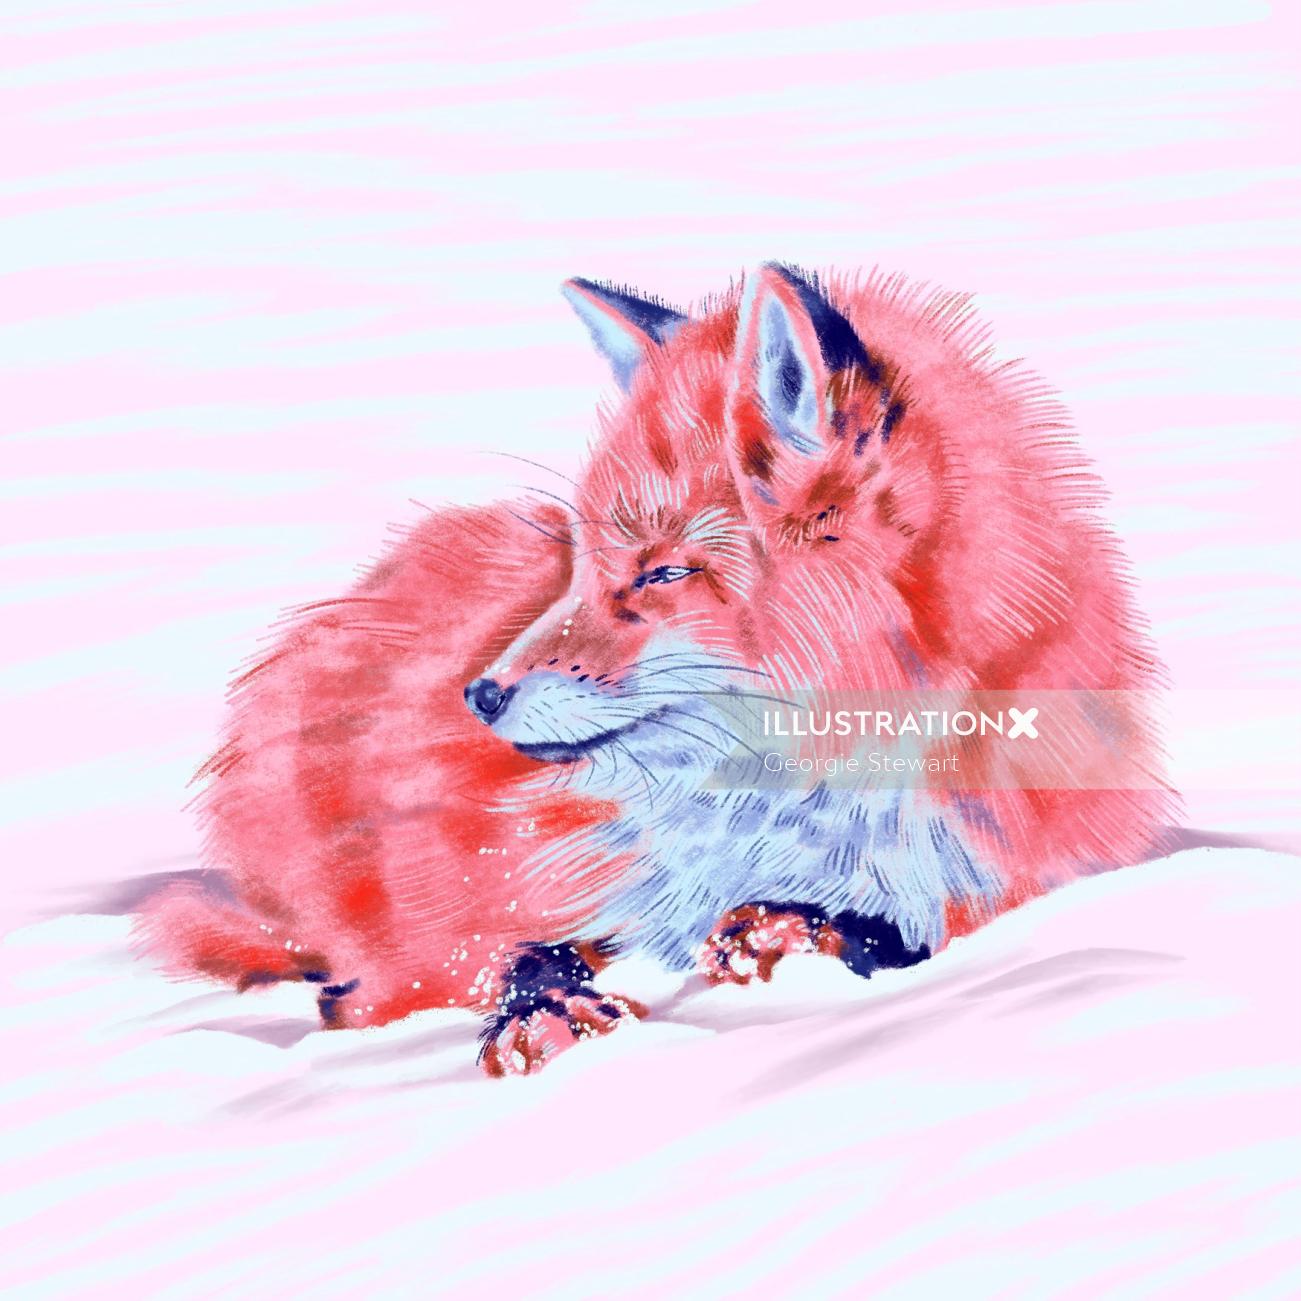 Xmas card featuring a fox illustration